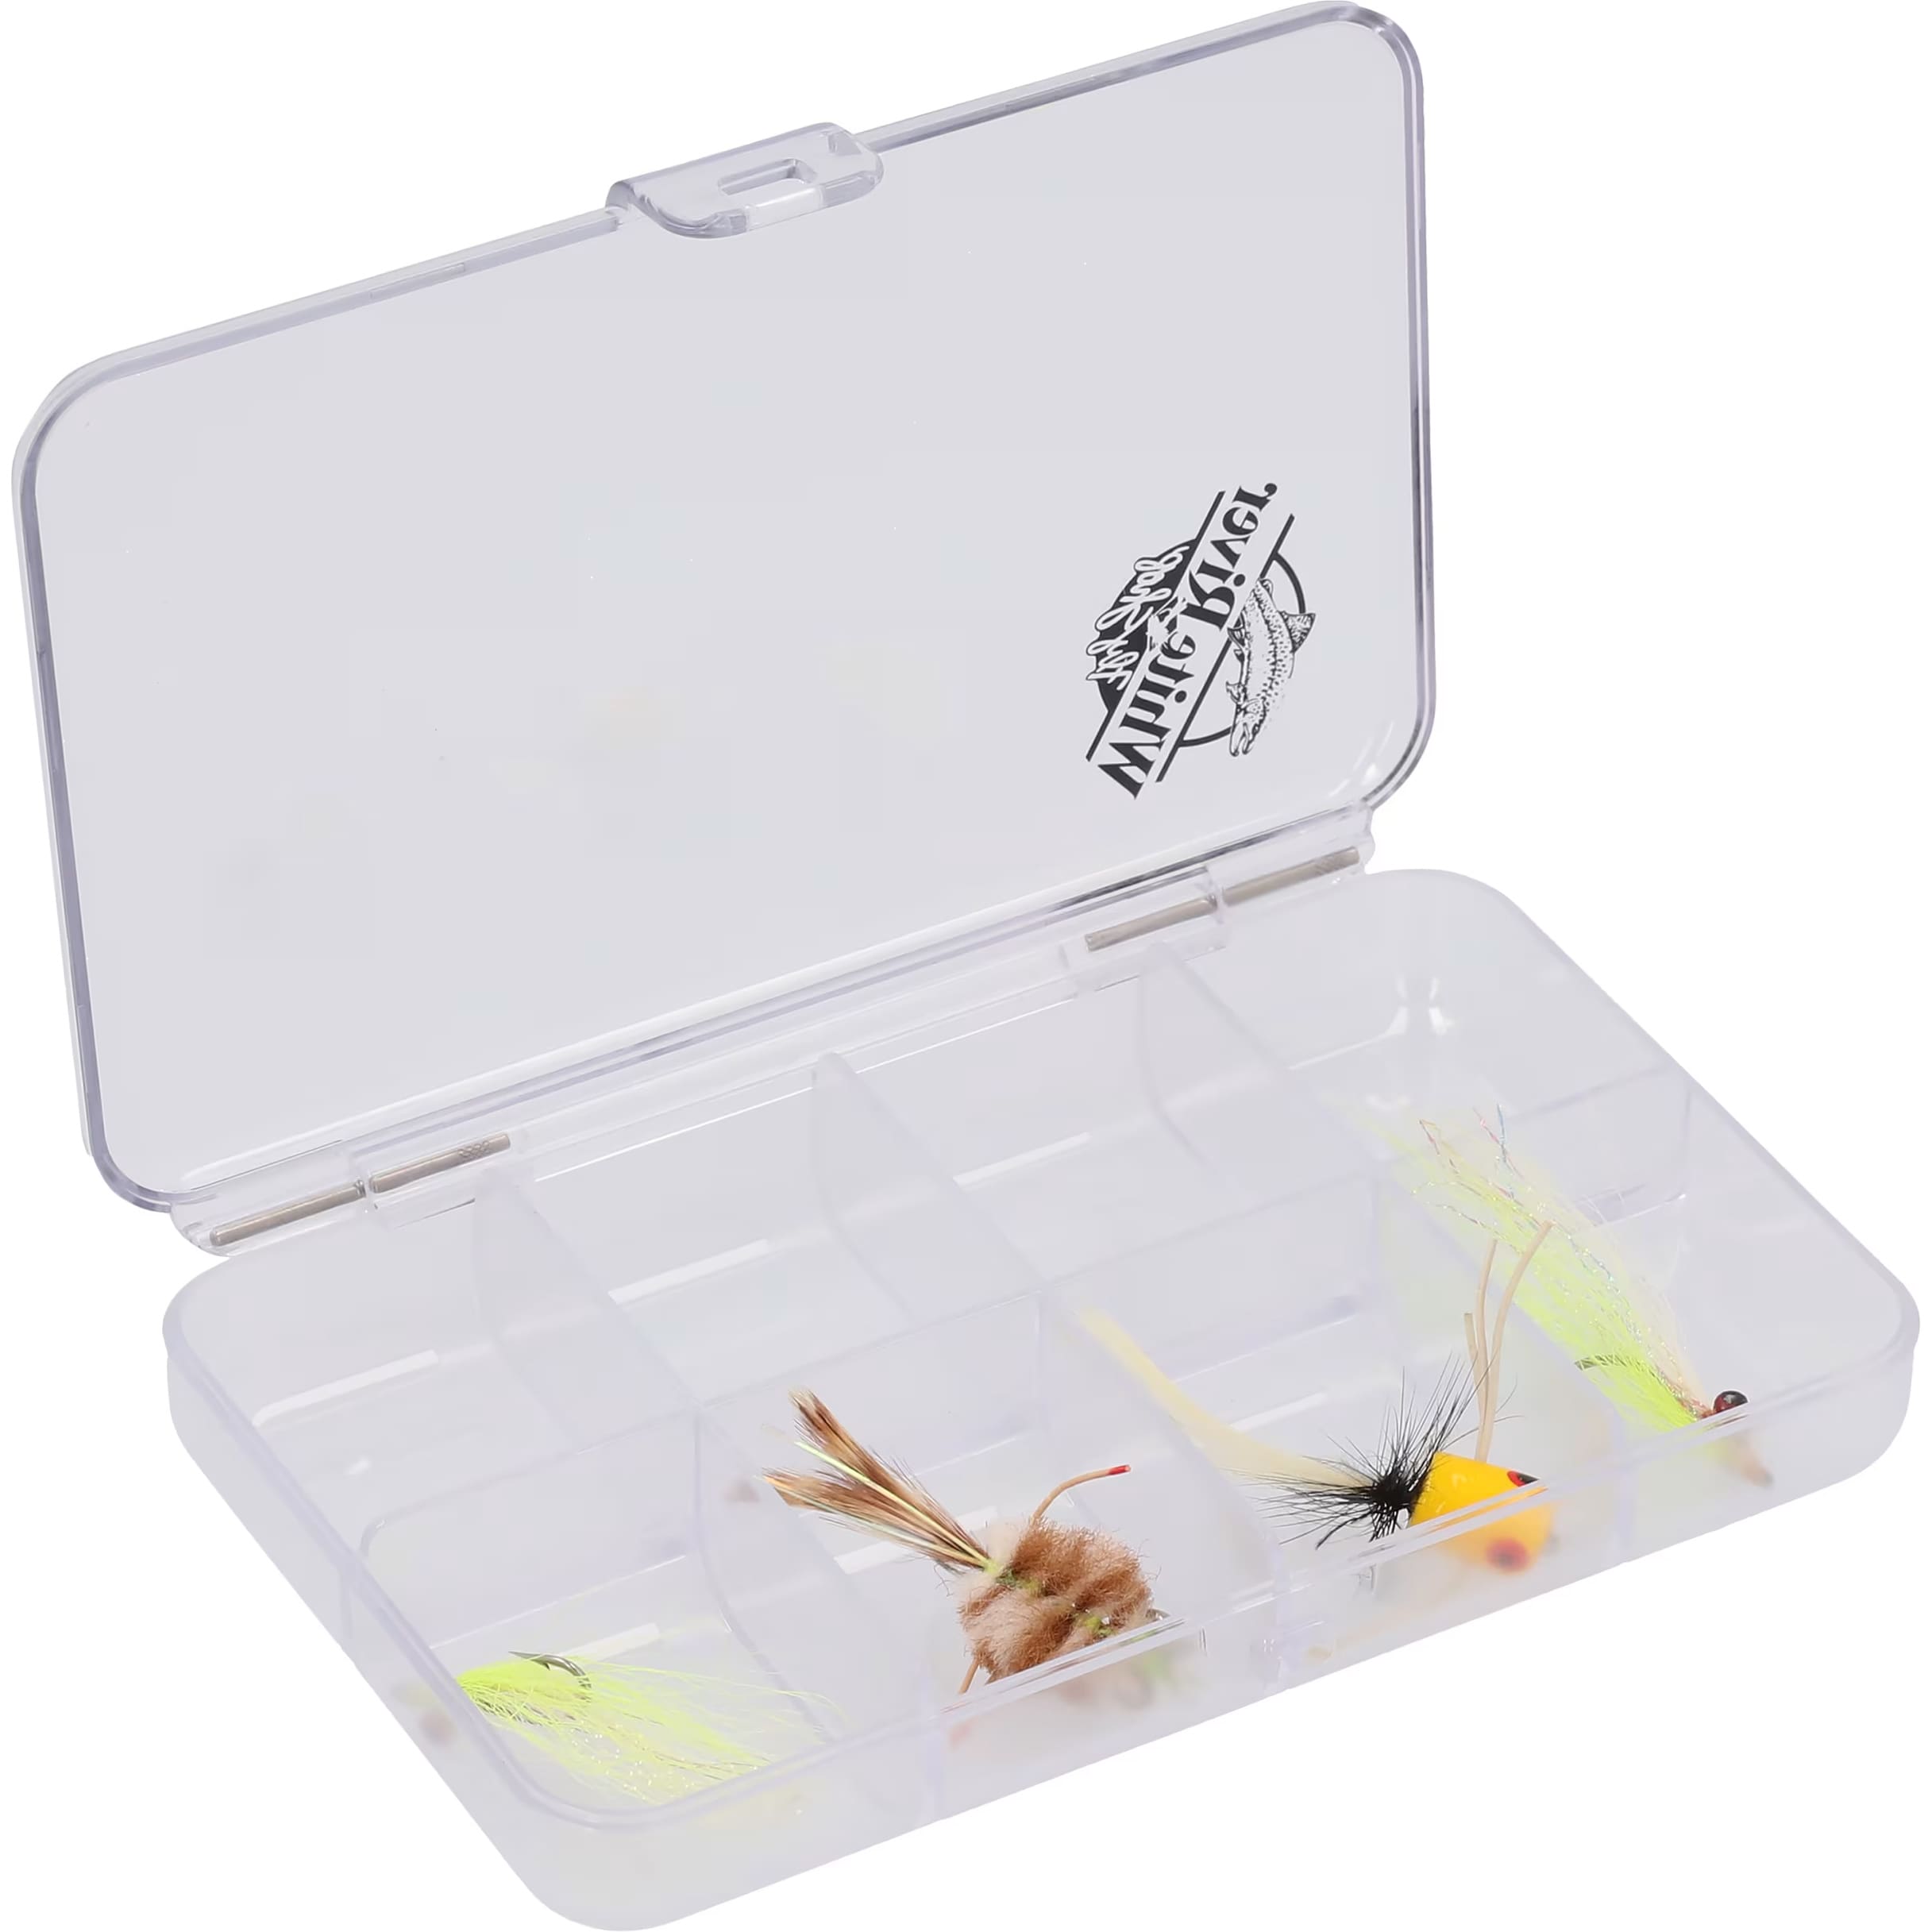 BcTlyInc Pocket Fishing Container,Fishing Dry Box,Fly Fishing Box